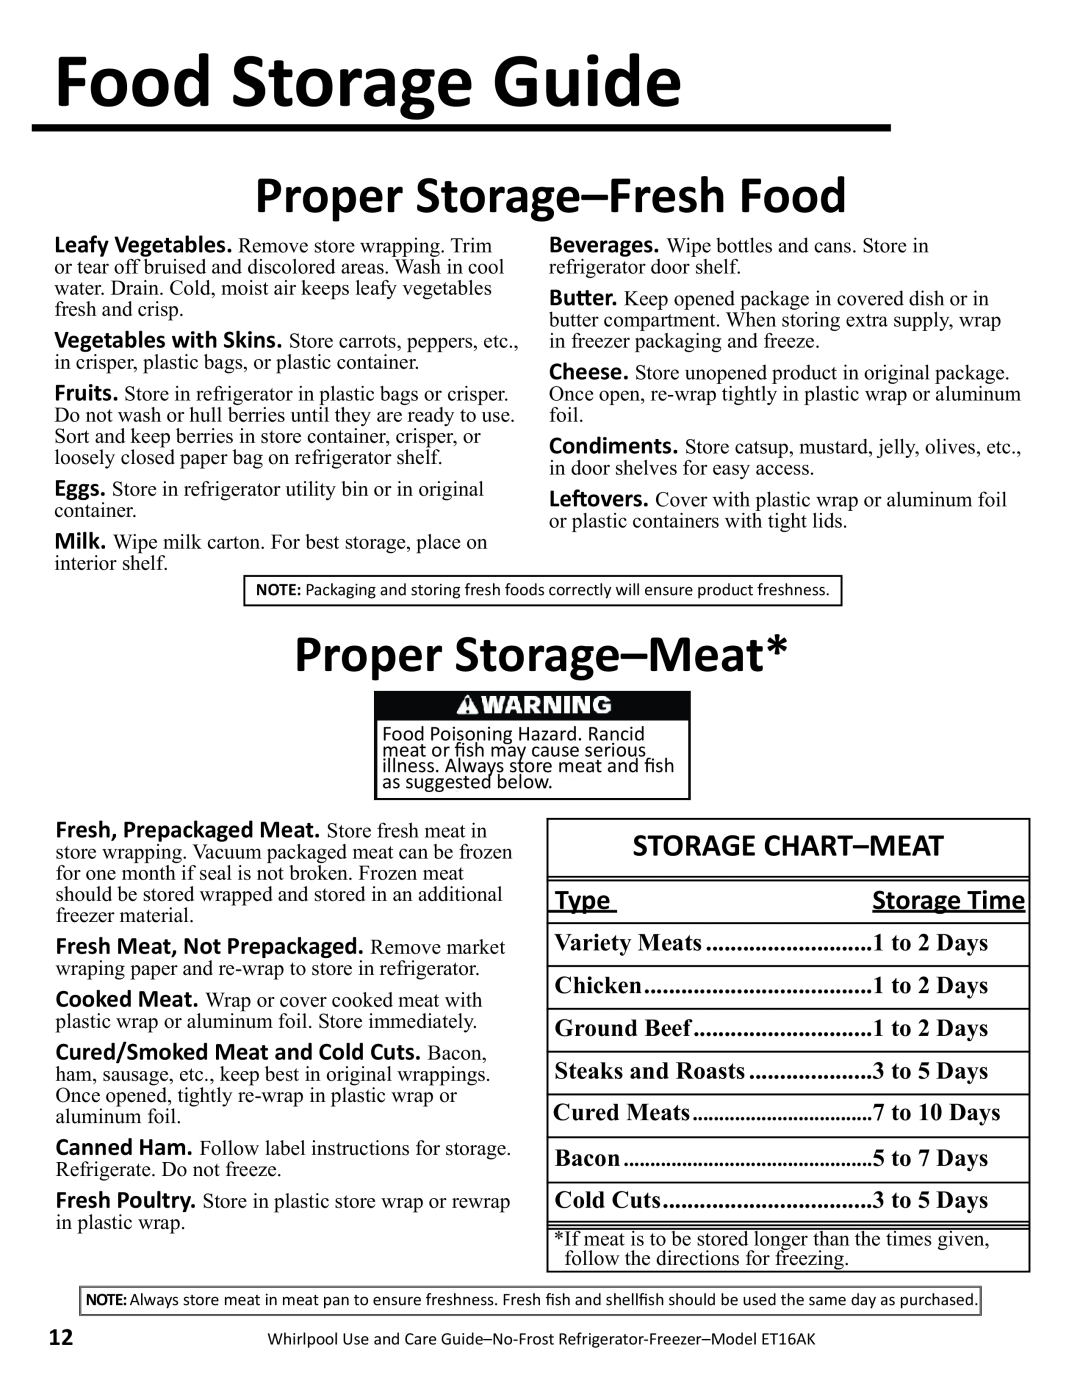 Whirlpool ET16AK Food Storage Guide, Proper Storage-FreshFood, Proper Storage-Meat, Storage Chart-Meat, Type, Storage Time 